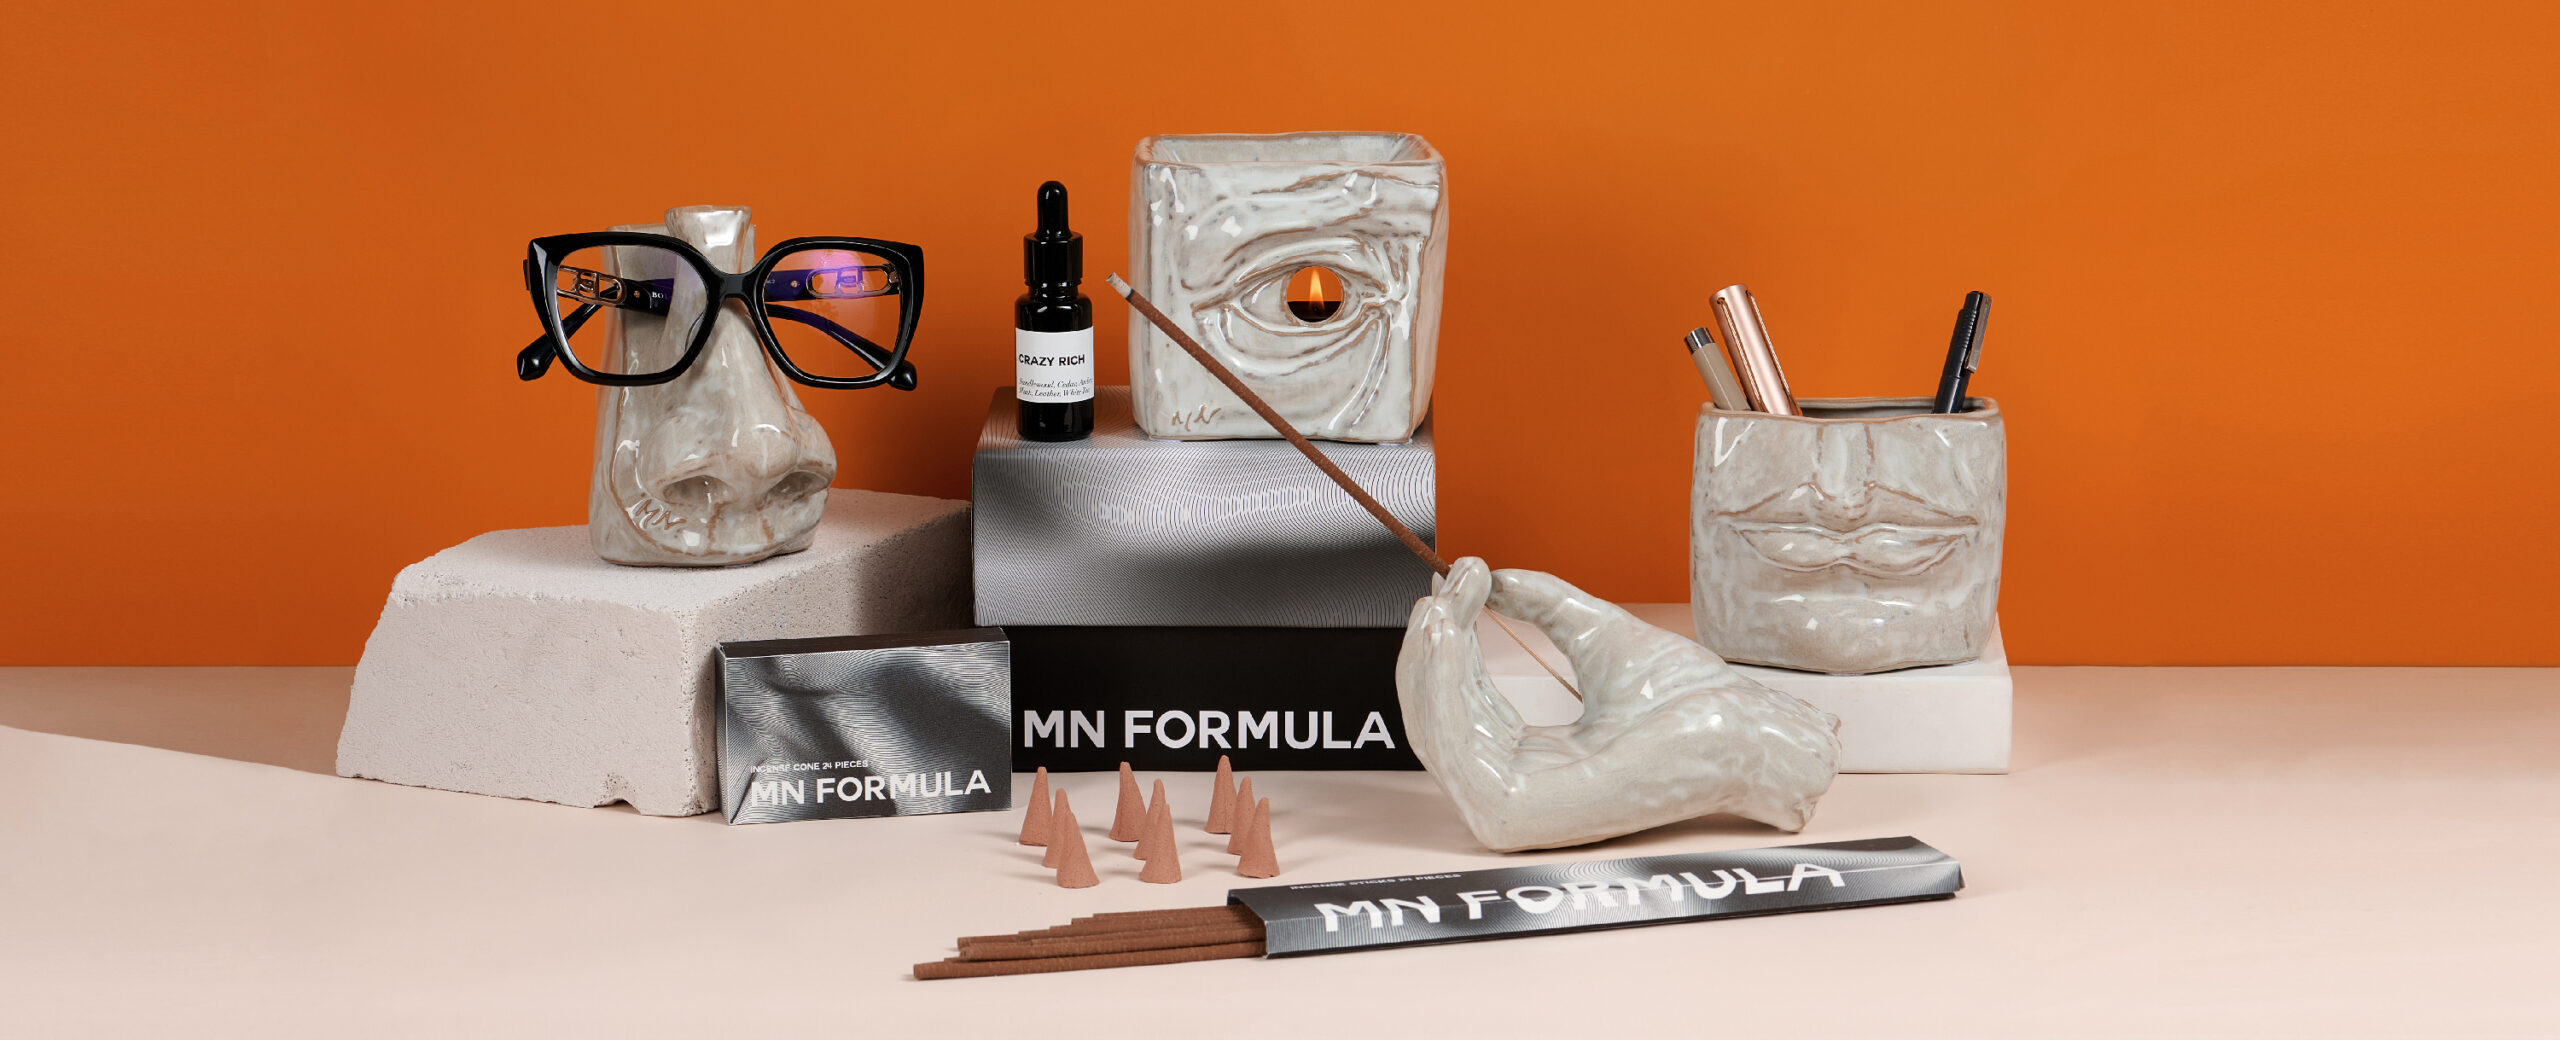 MN Formula sculpture